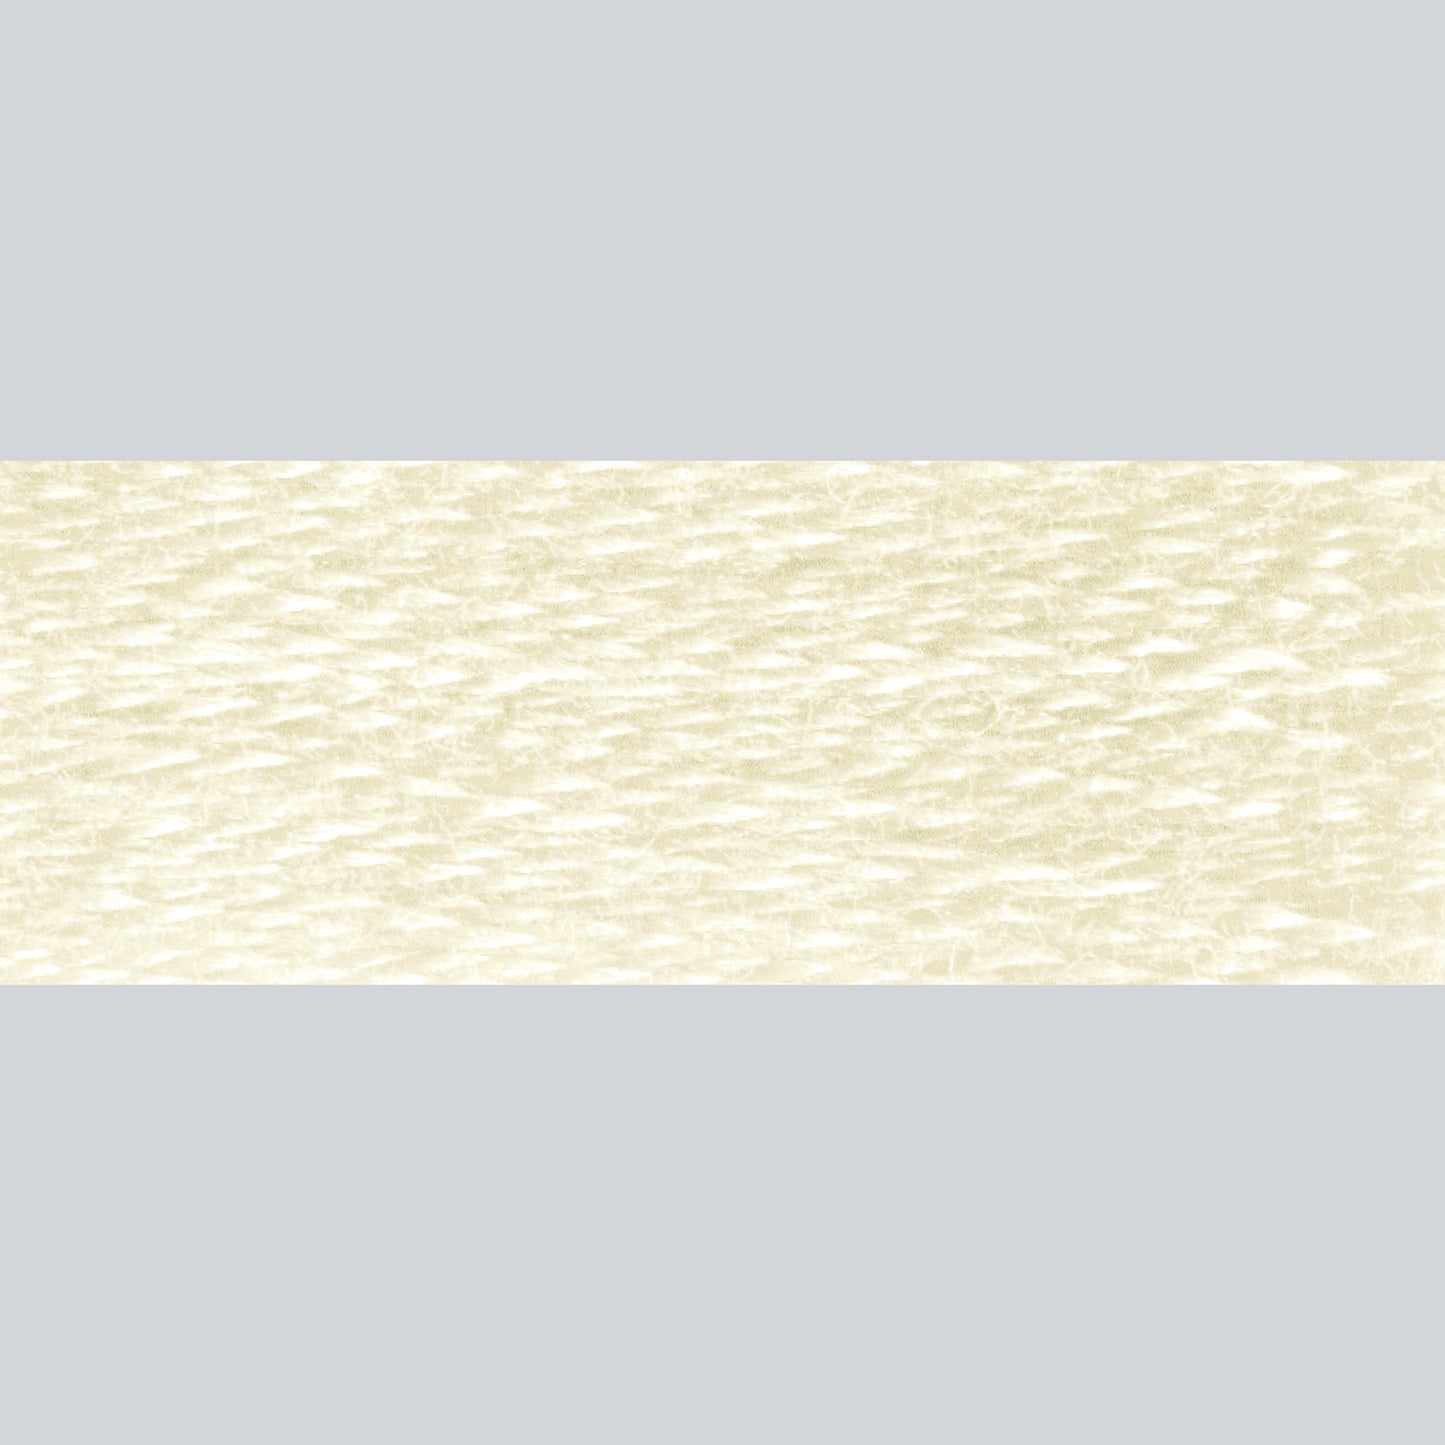 DMC Embroidery Floss - 822 Light Beige Gray Alternative View #1